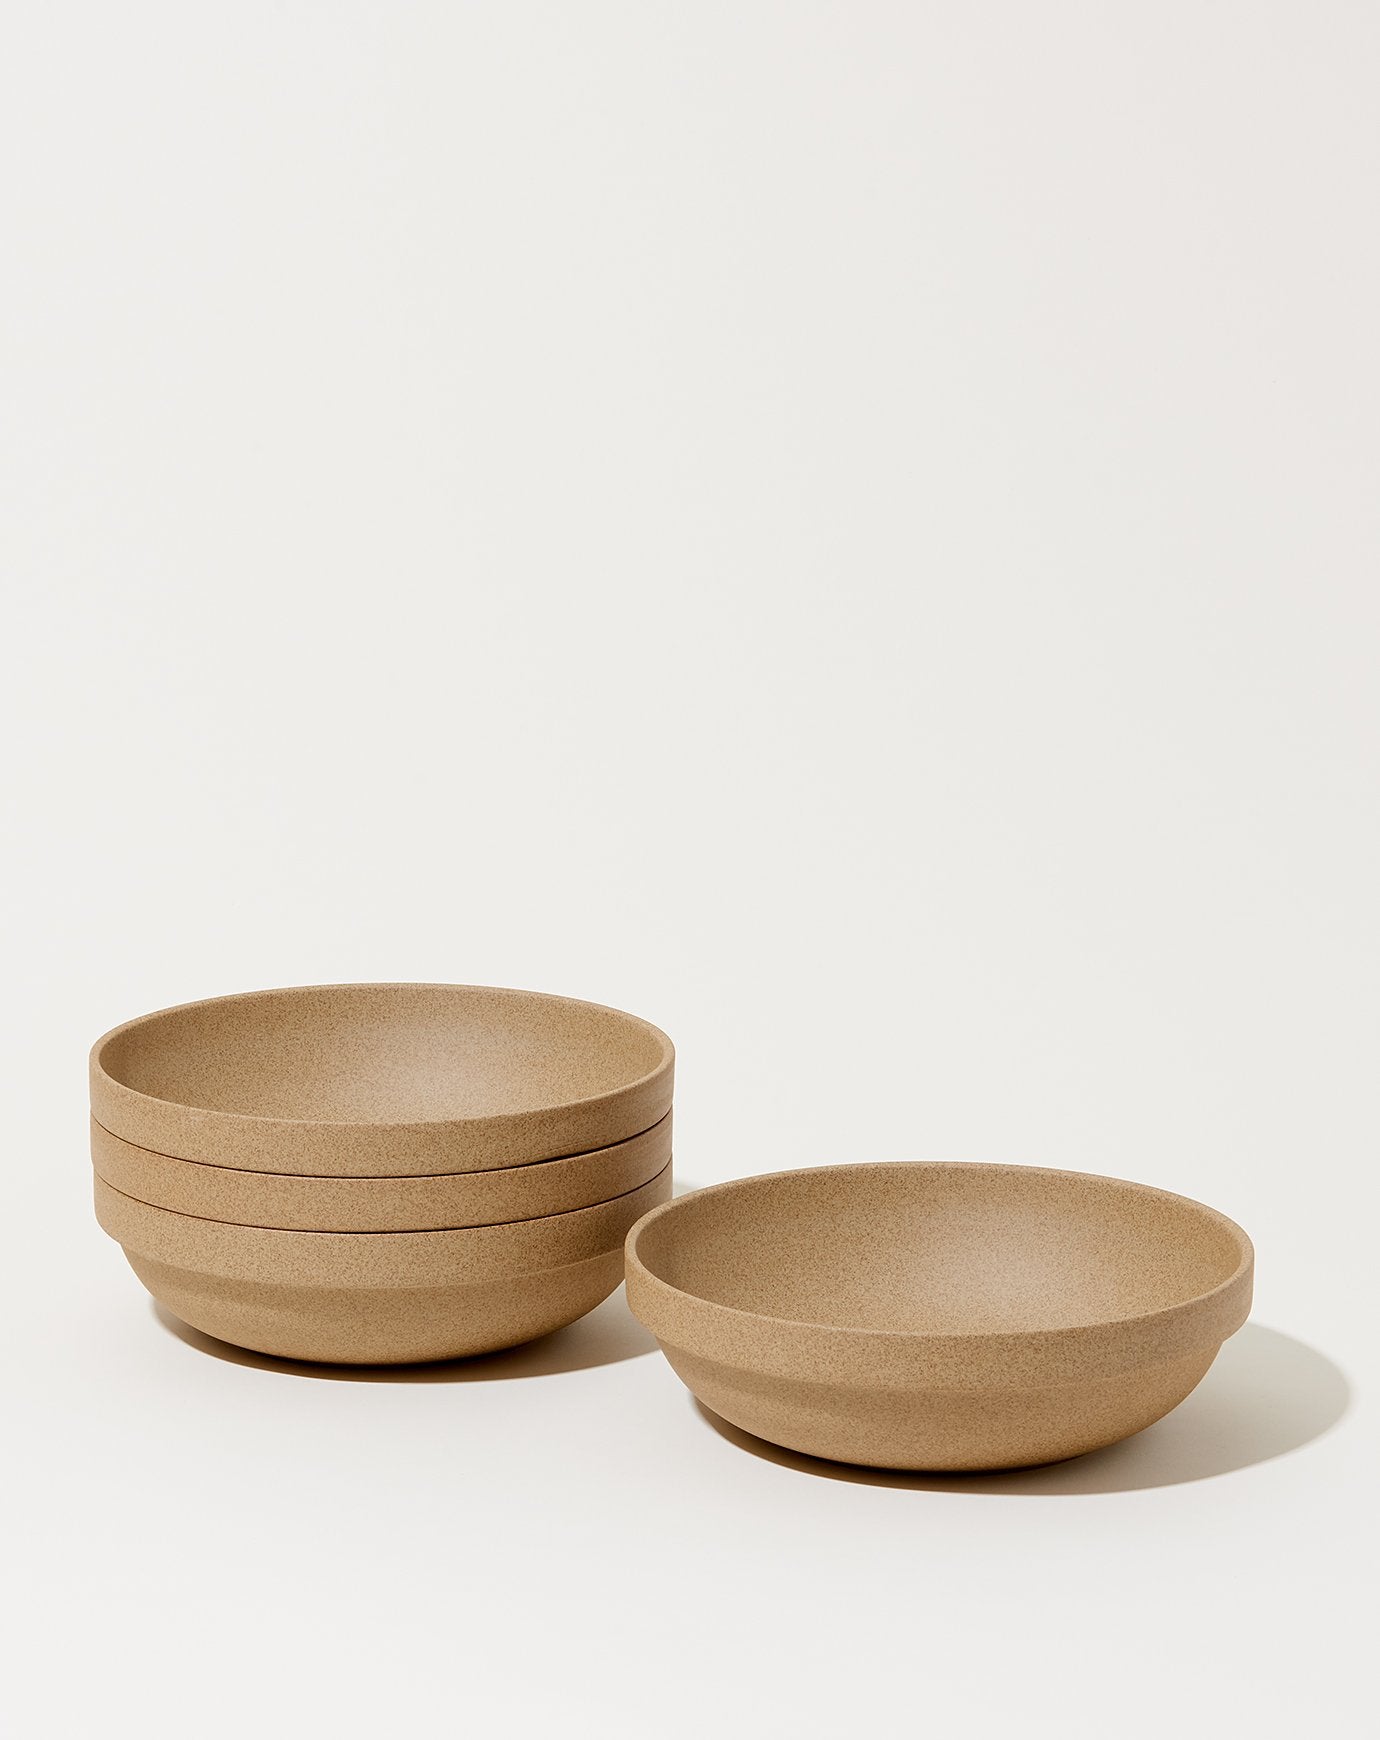 Hasami Porcelain Round Bowl in Natural